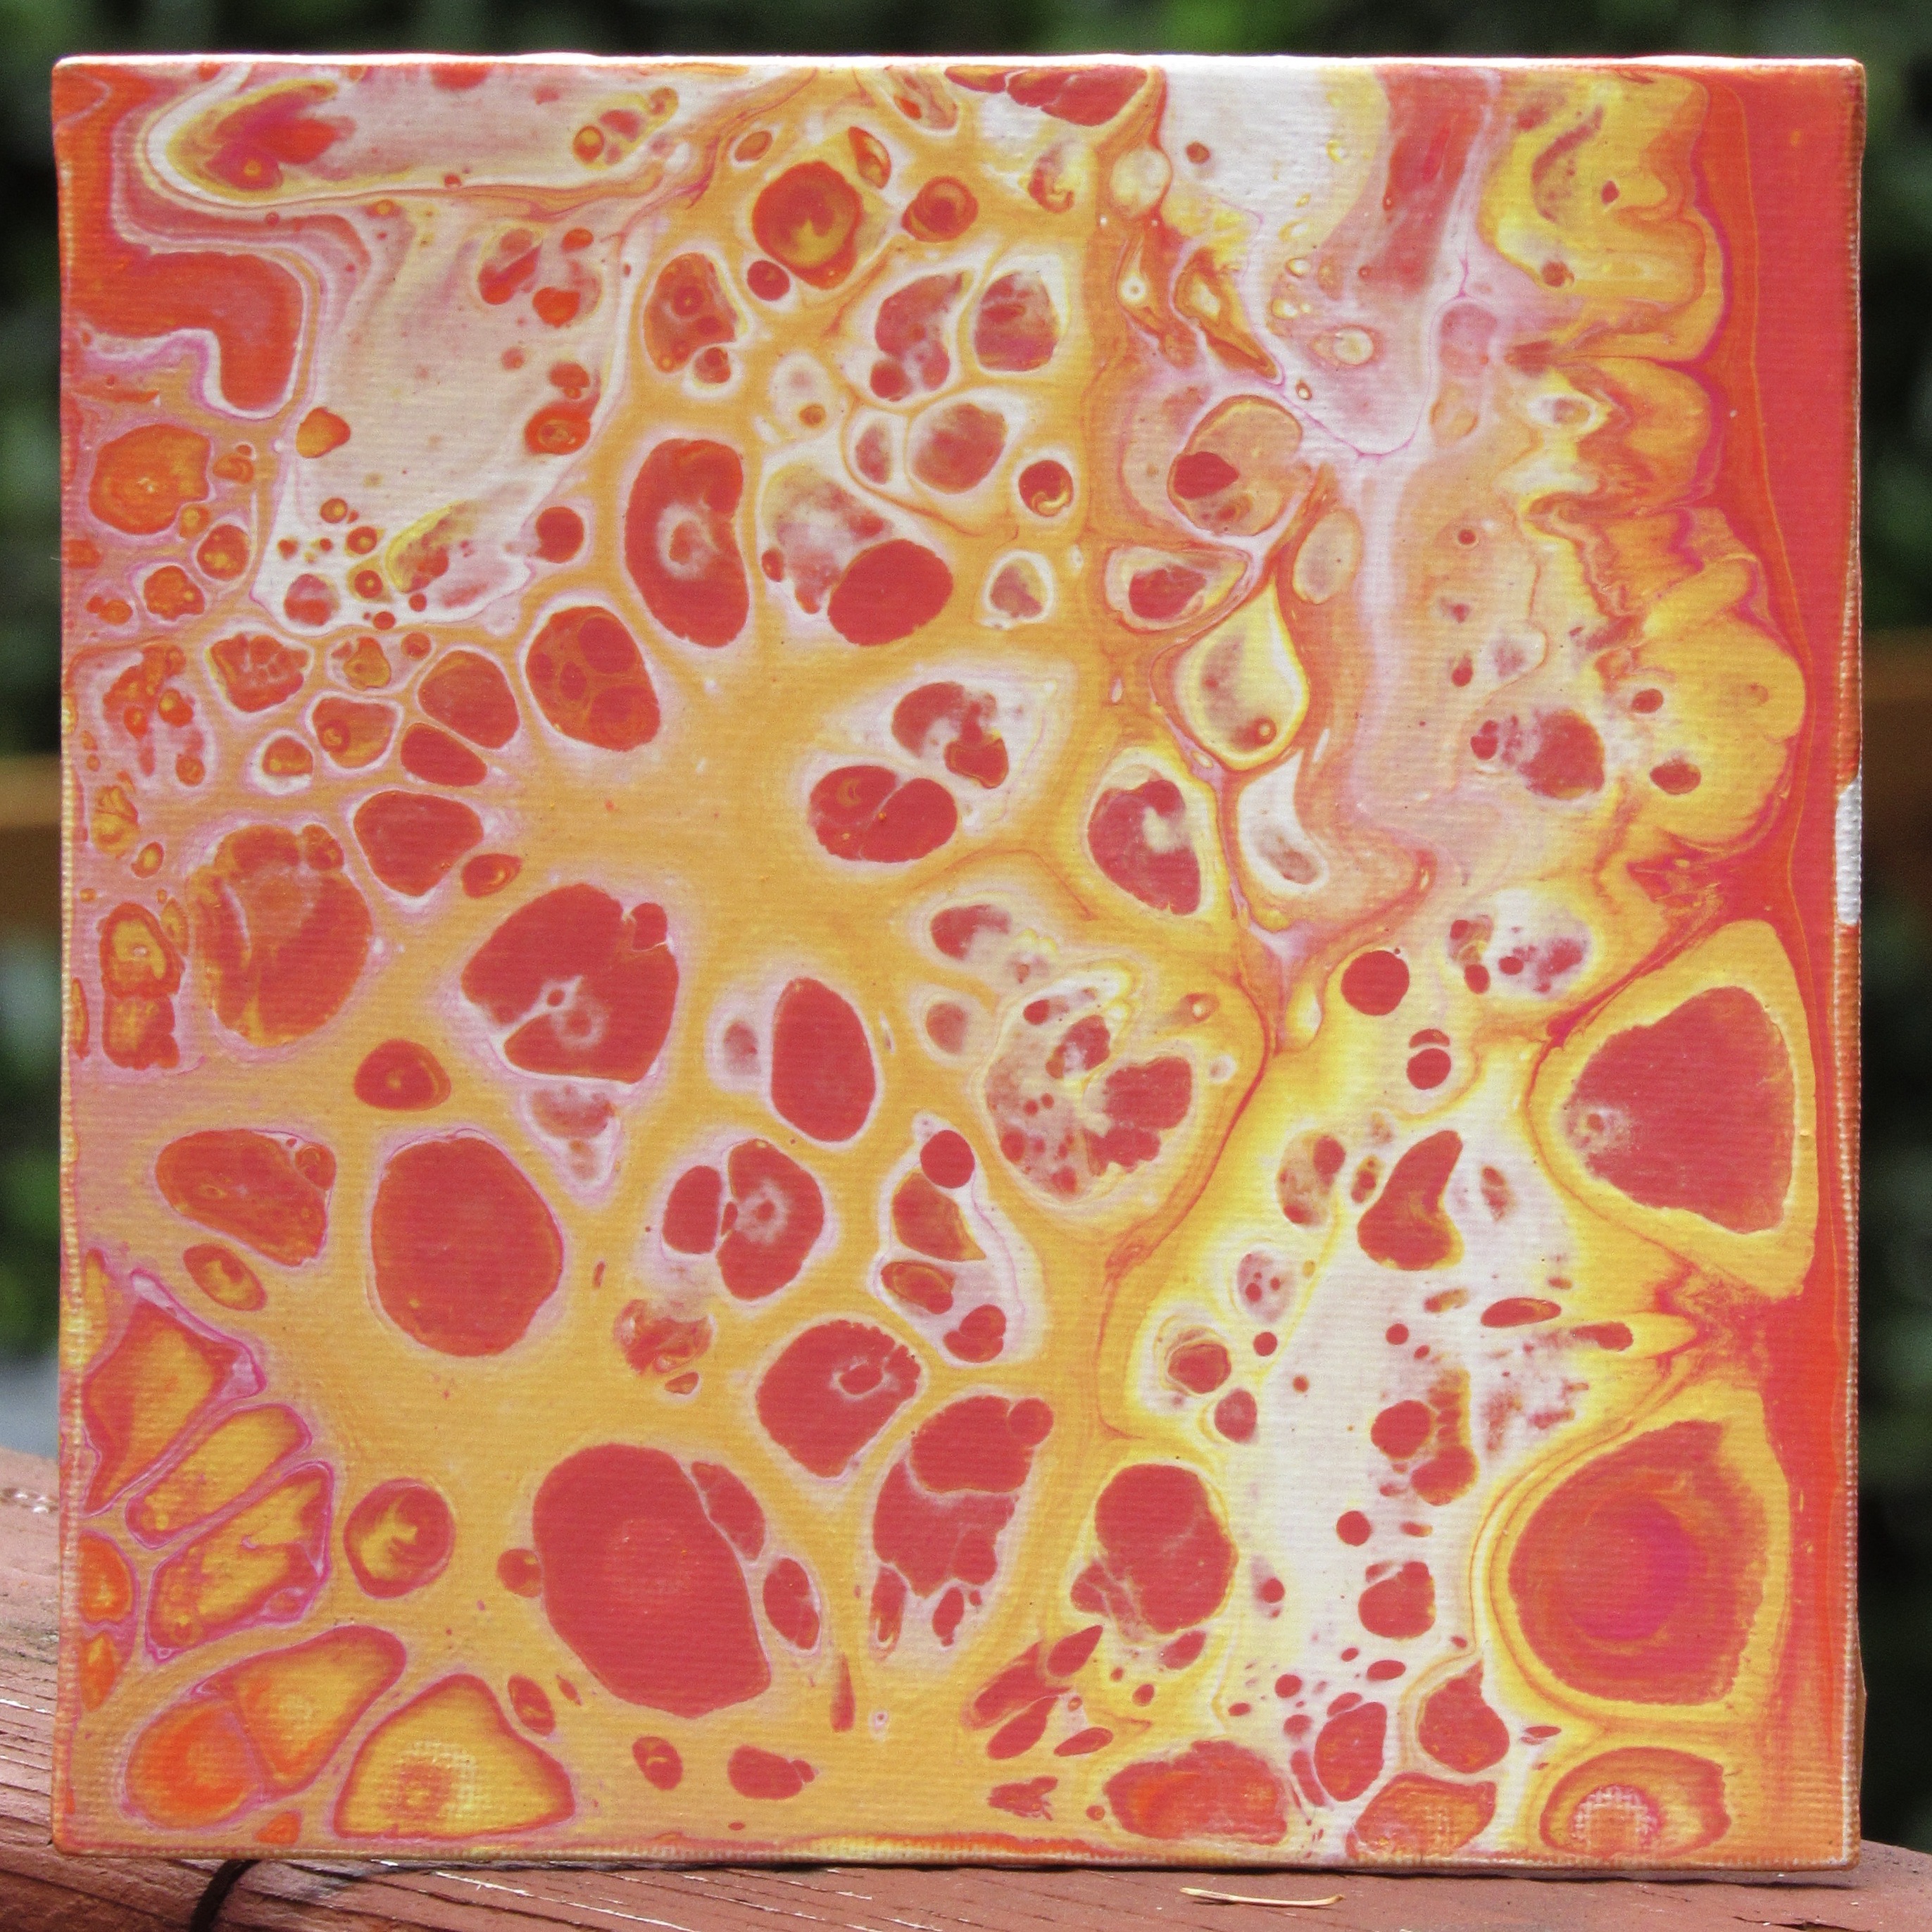 Orange acrylic pour painting